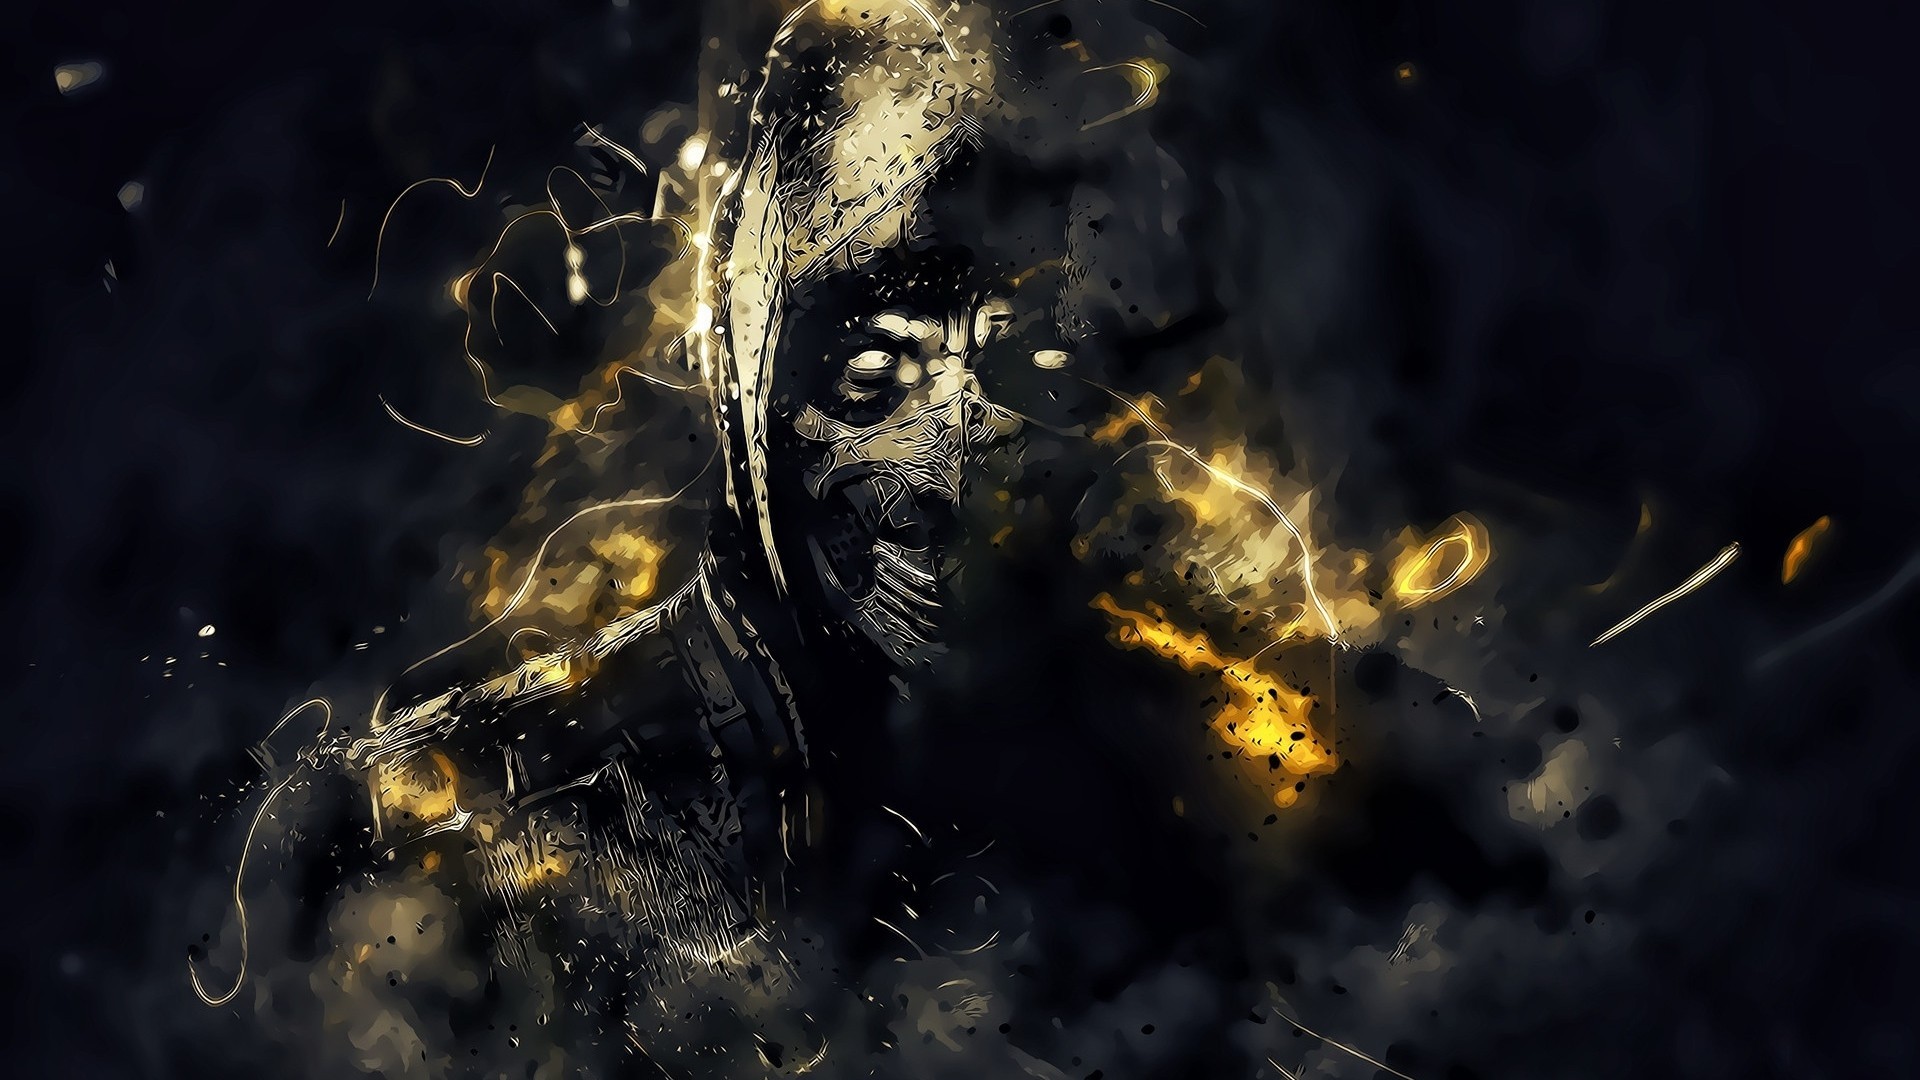 Mortal Kombat, Scorpion, Fire, Artwork - Android Scorpion Mortal Kombat , HD Wallpaper & Backgrounds